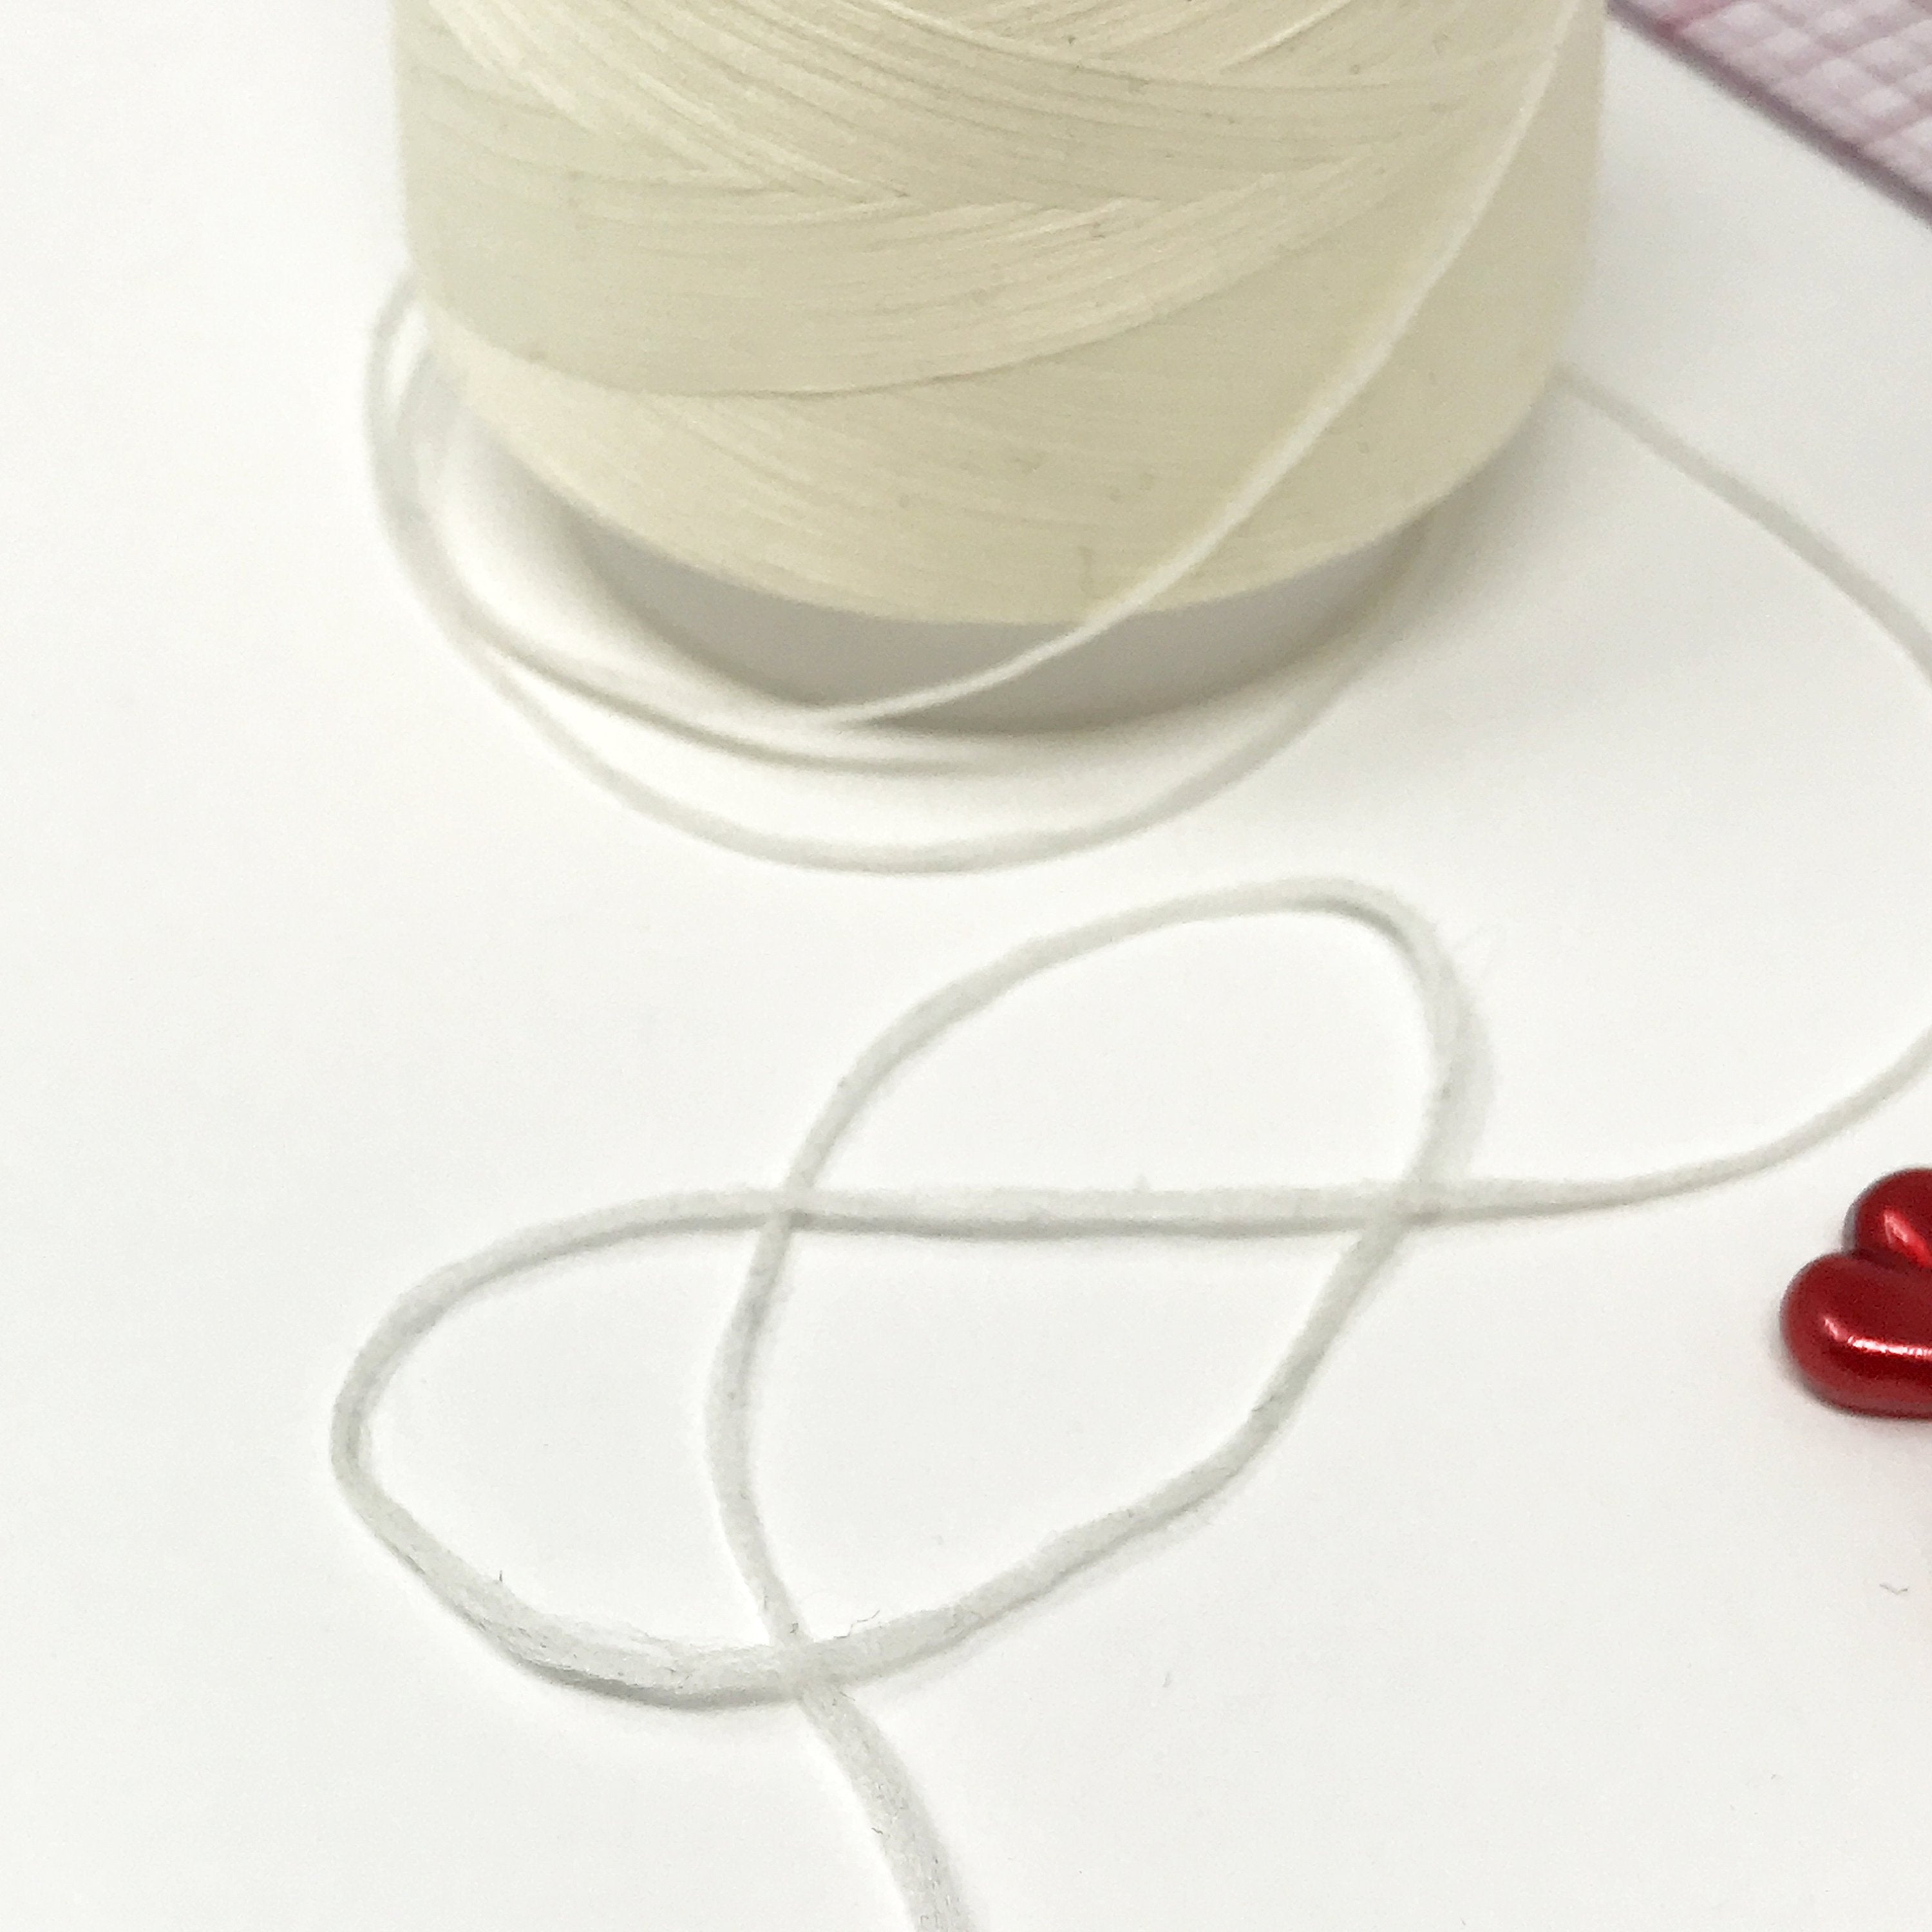 Stretch Thread Textured Nylon Thread for Bobbin or Looper. Maxi-Lock, 2000 Yards-Stitch Love Studio